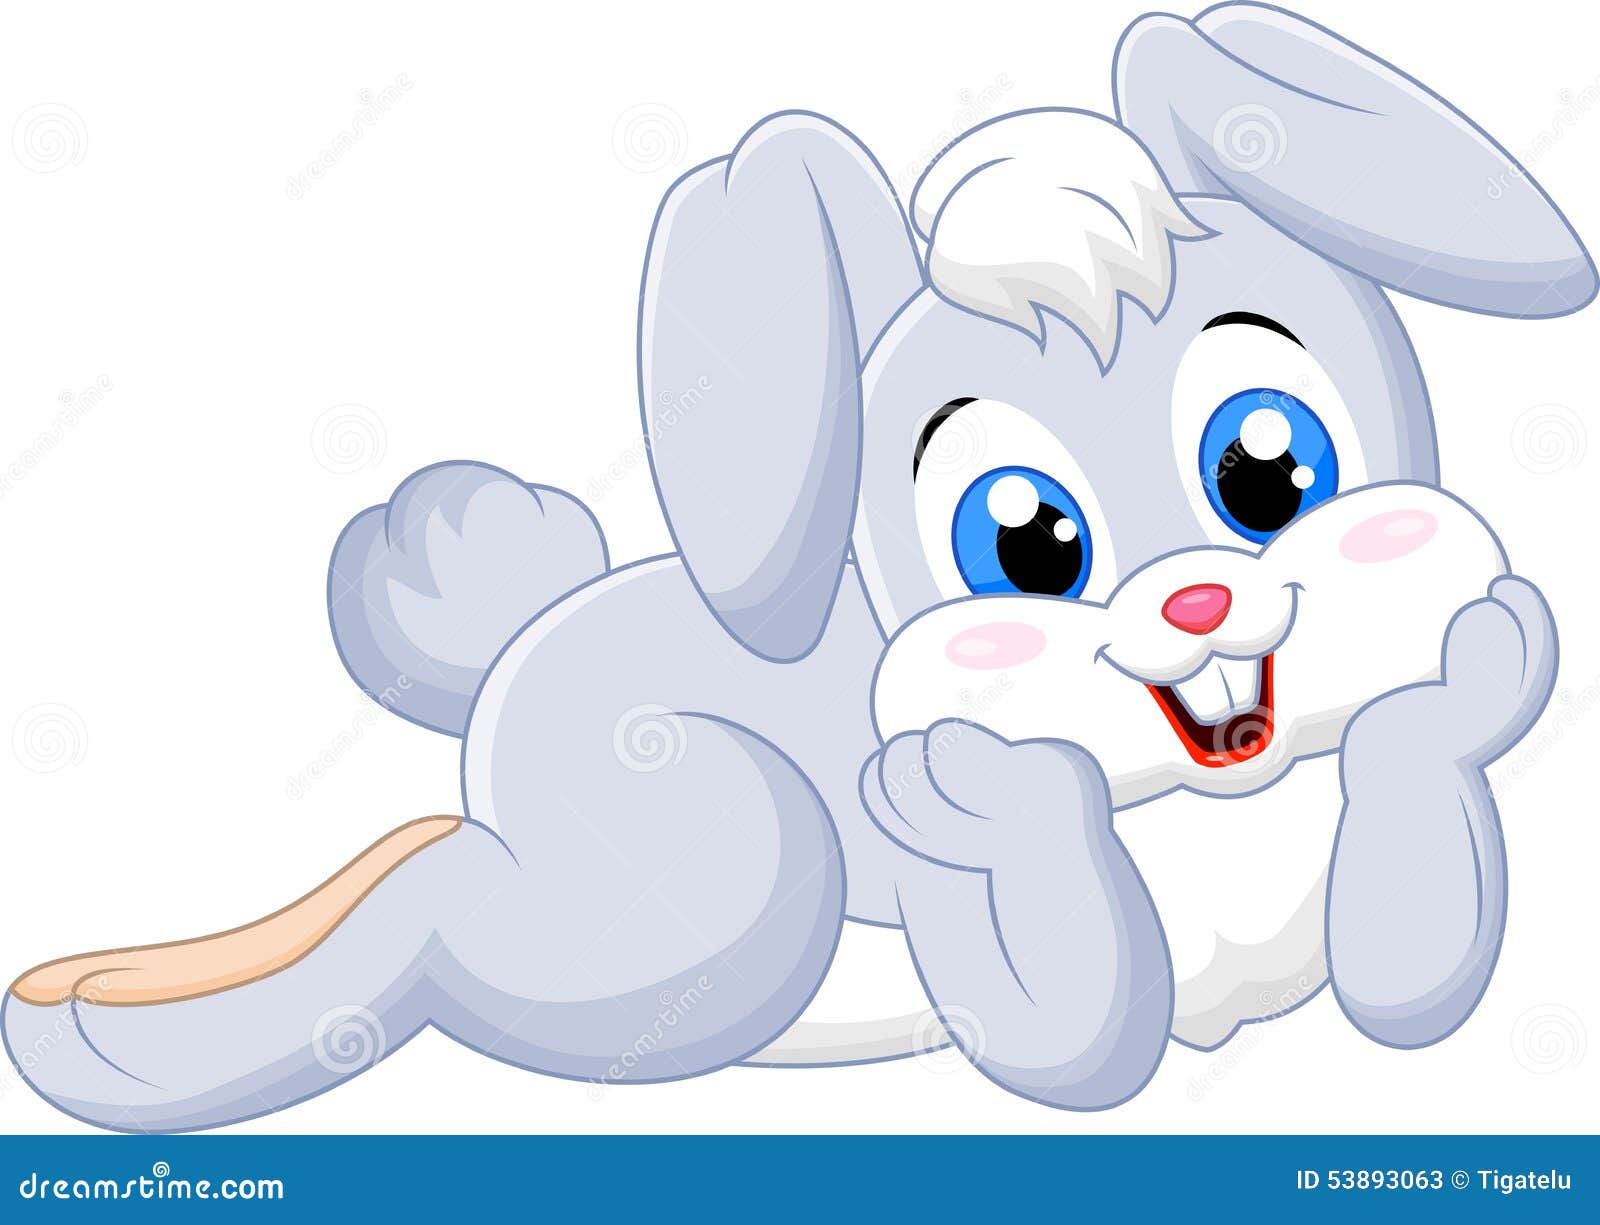 Cartoon cute bunny stock vector. Illustration of funny - 53893063